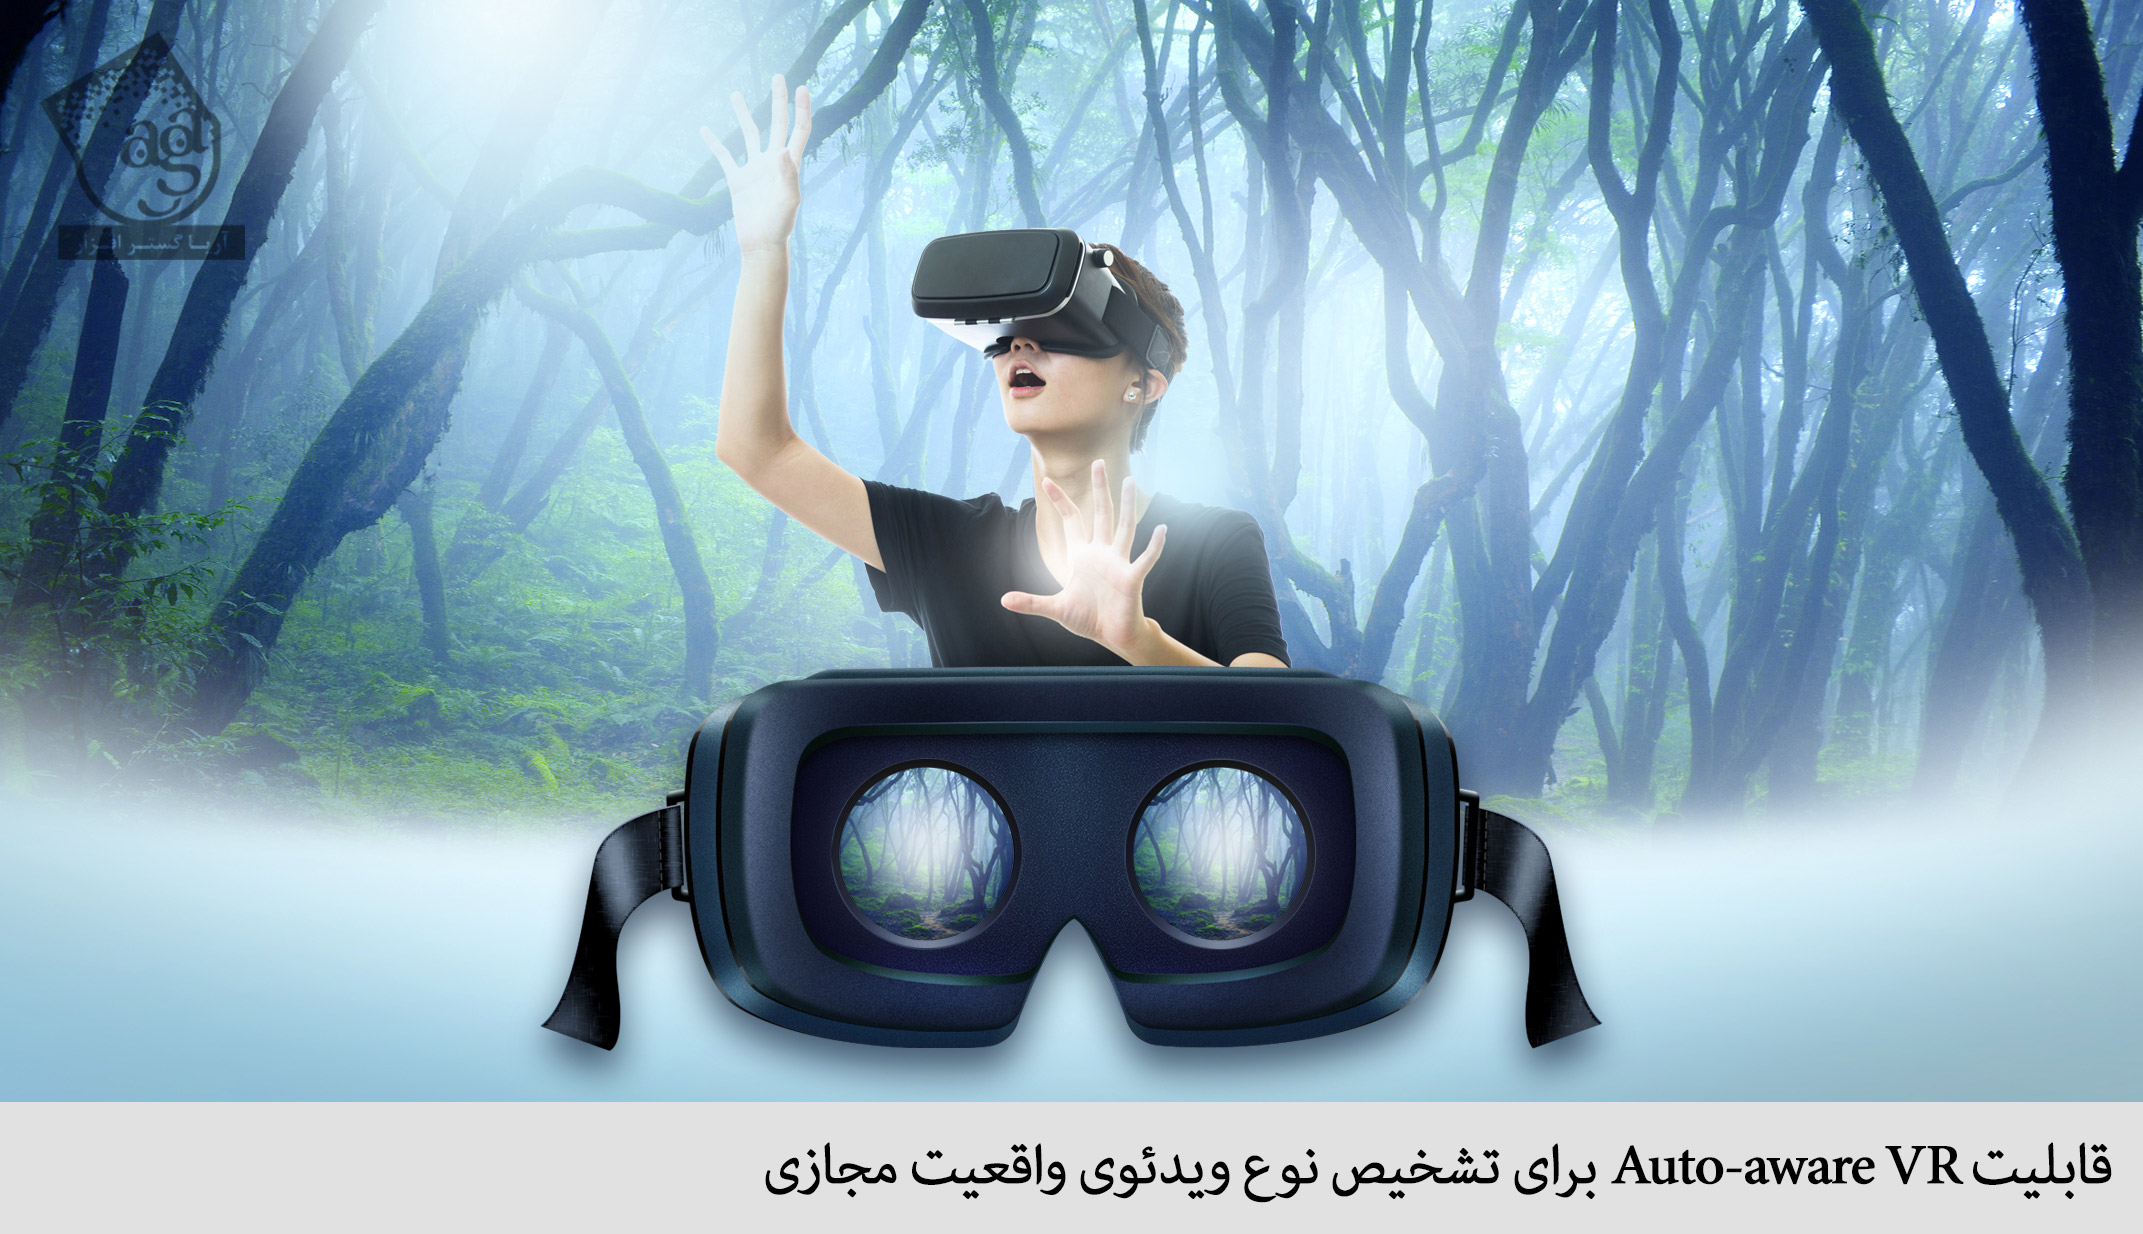 Vr net. Виар очки вр360. Очки виртуальной реальности для детей. Очки виртуальной реальности на человеке. Вид в очках виртуальной реальности.